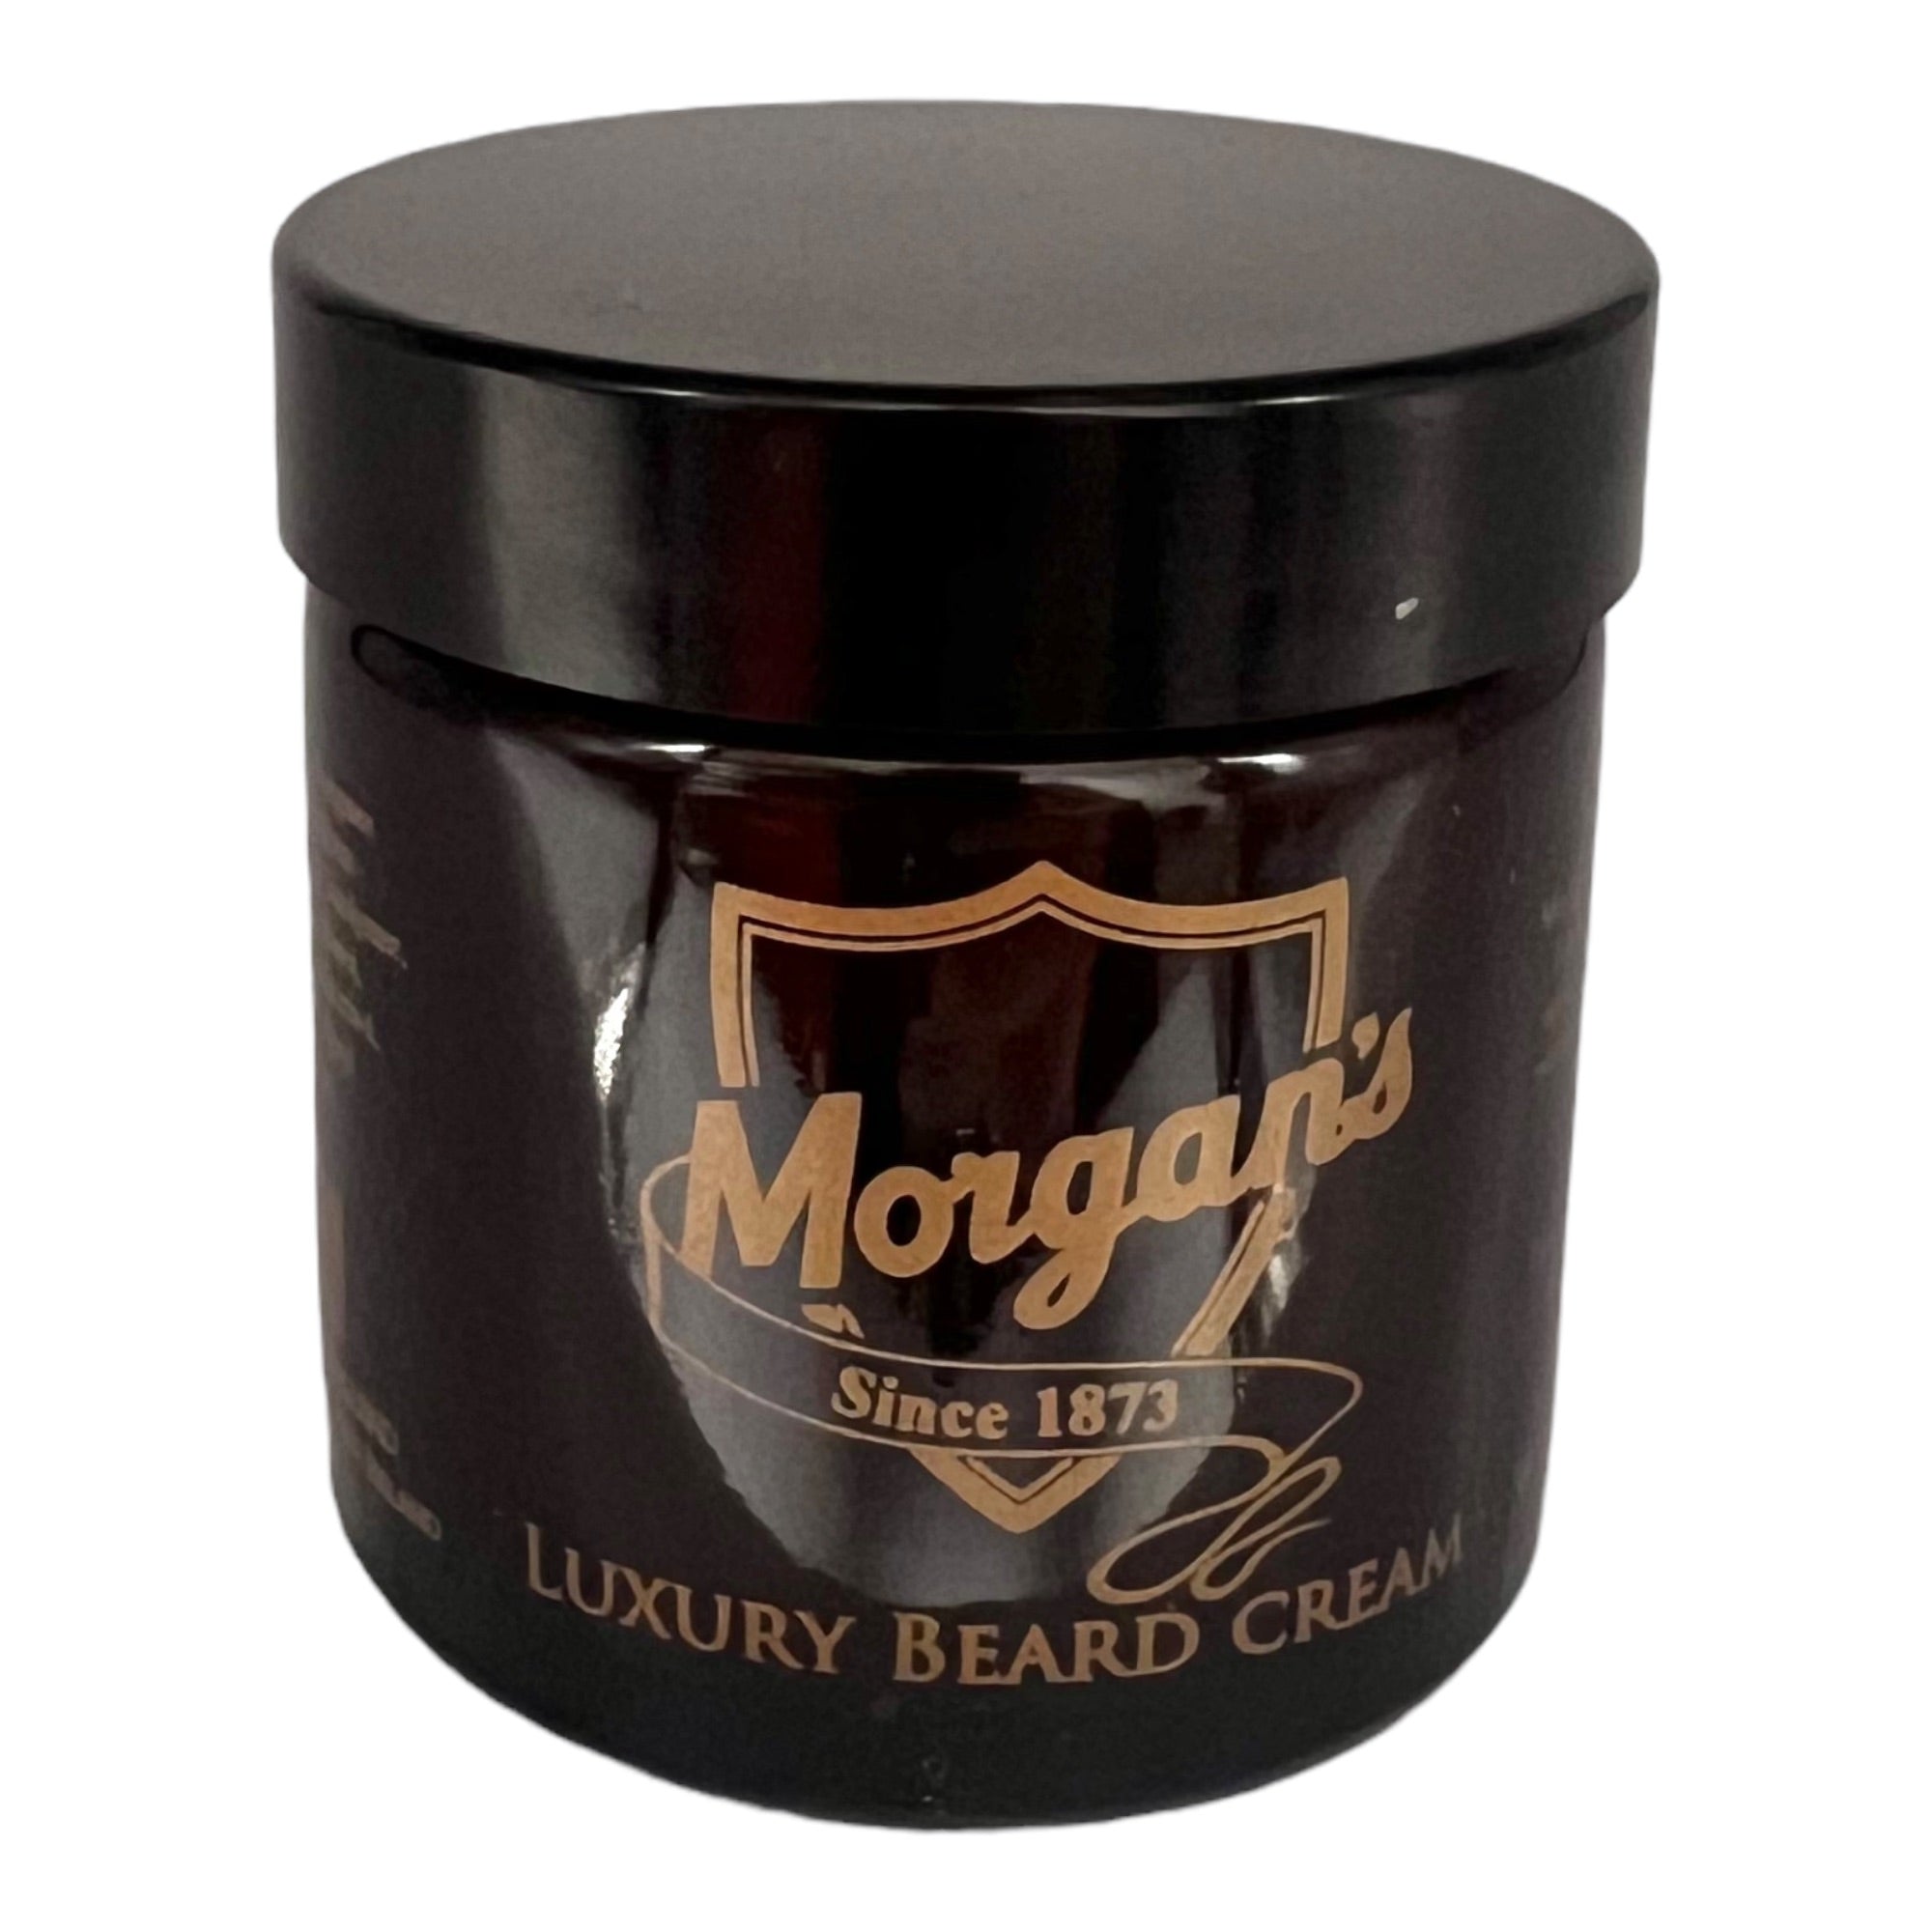 Morgan's - Luxury Beard Cream 50ml